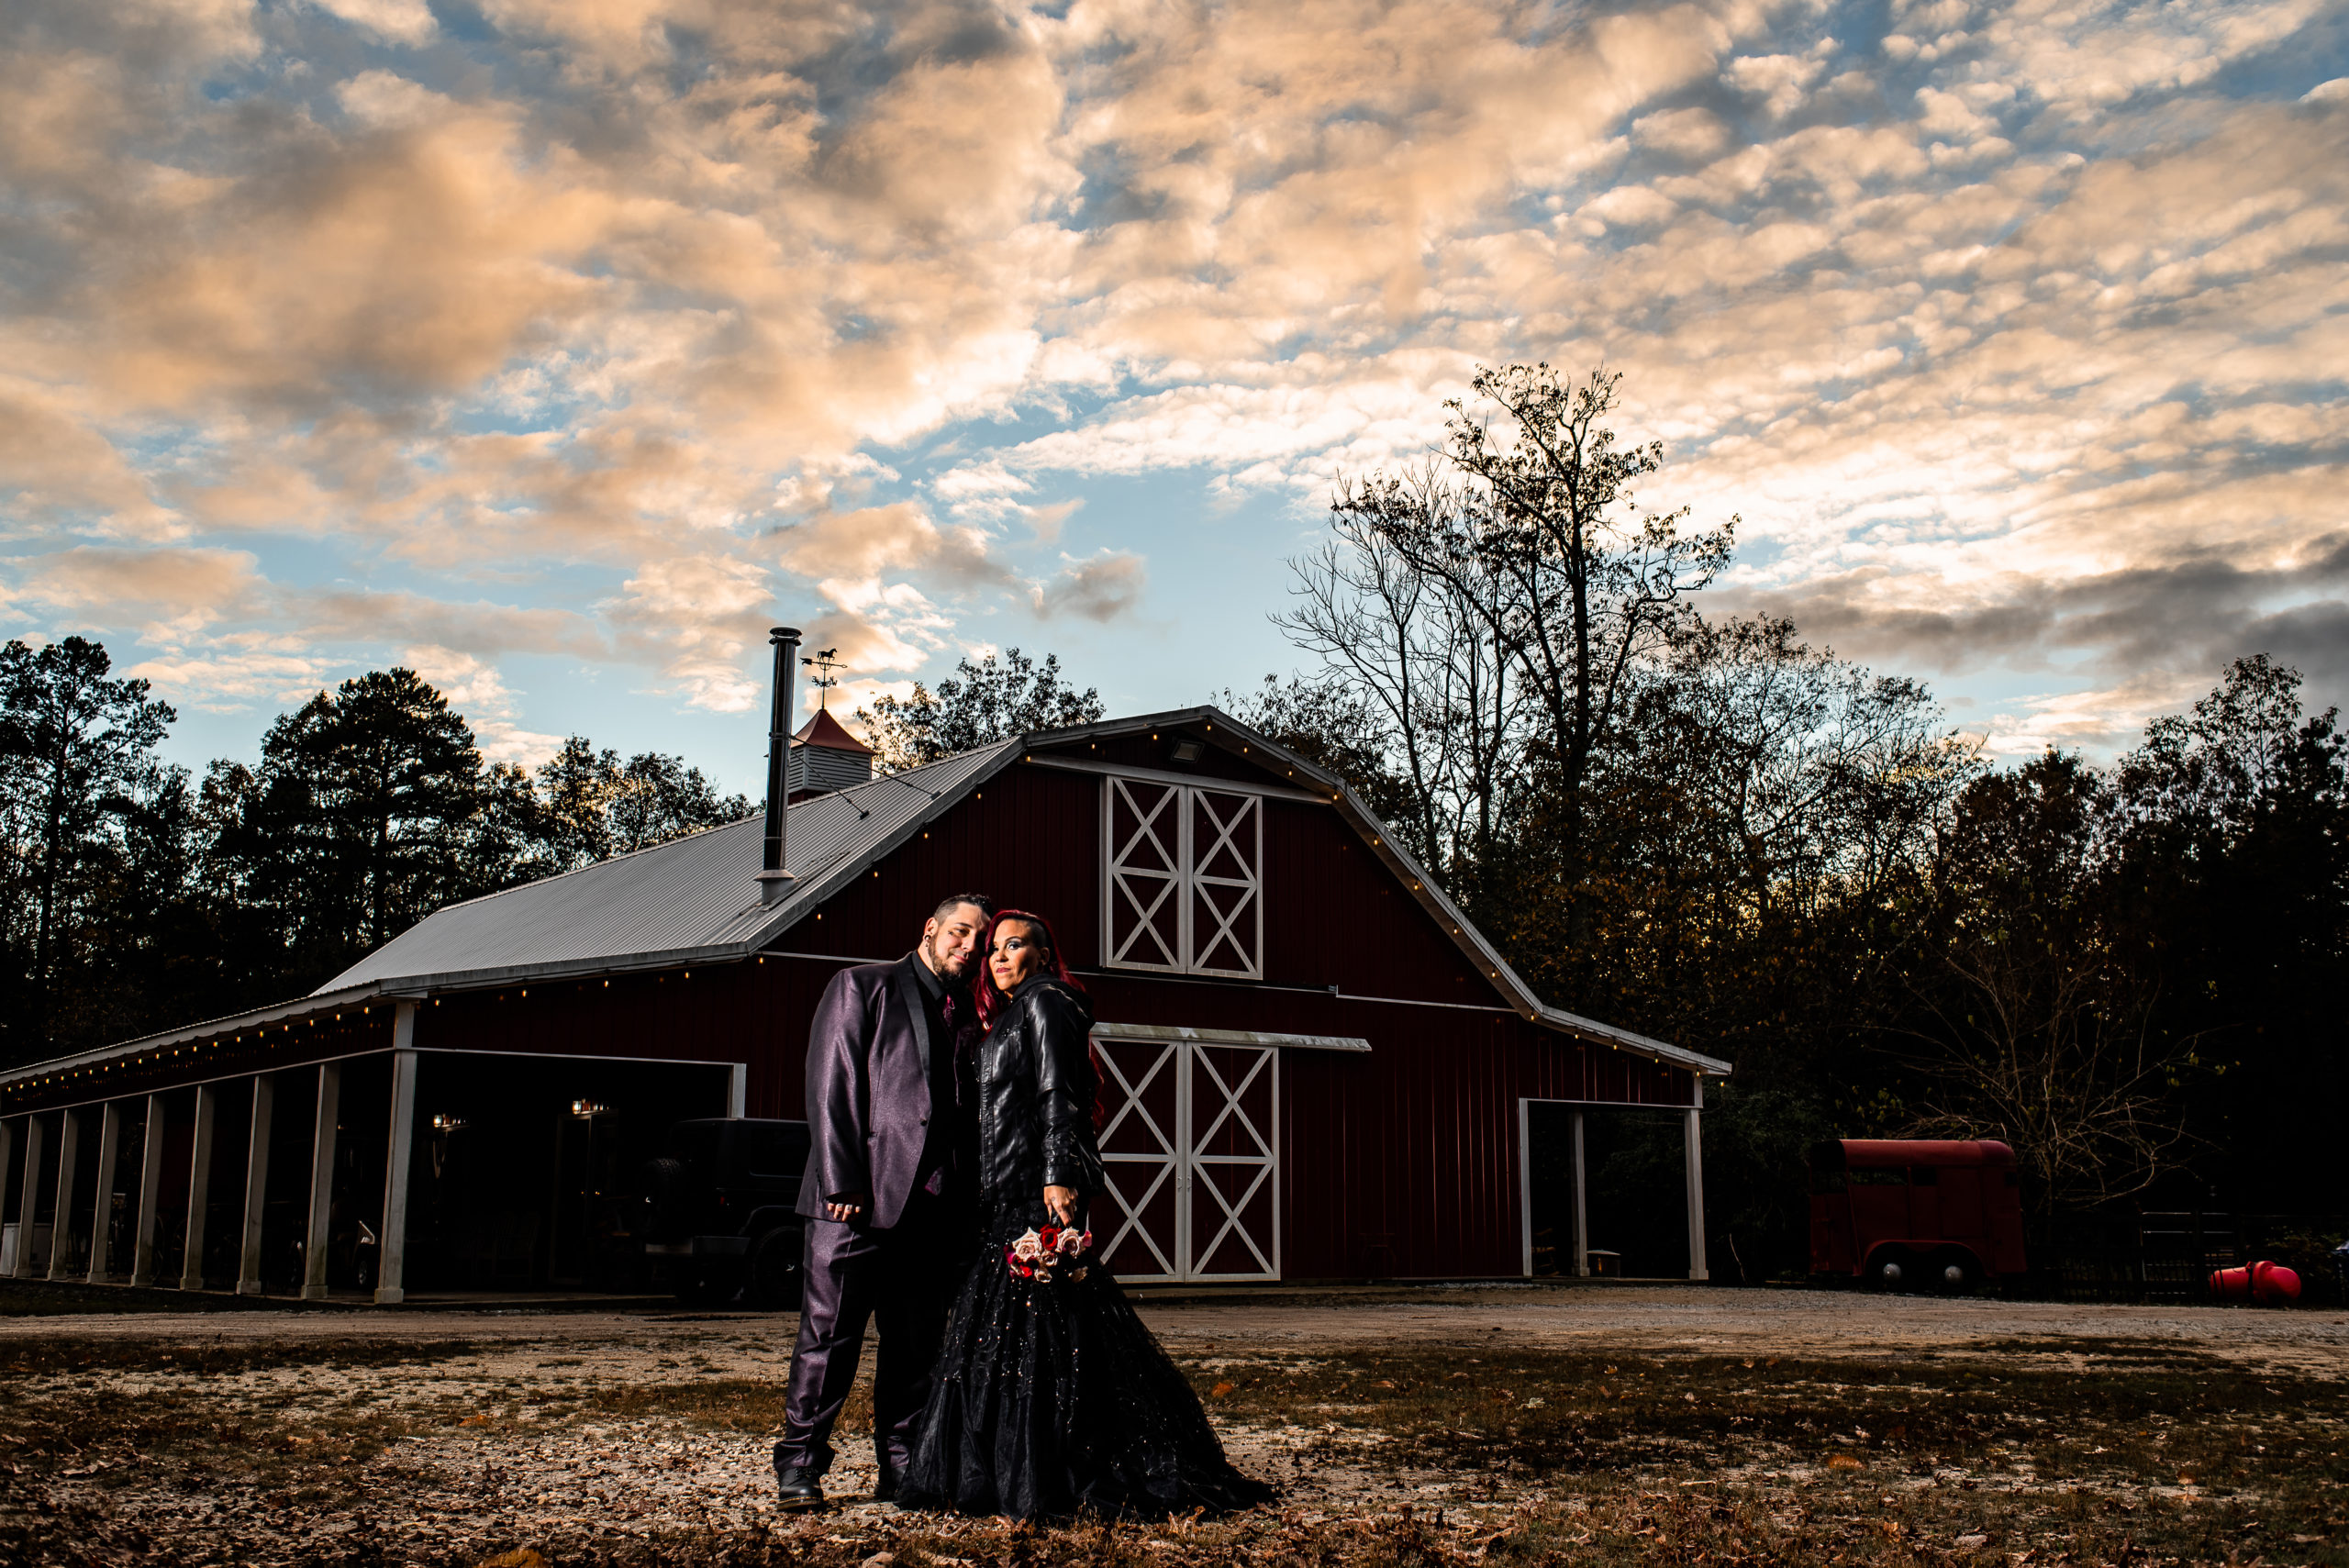 The Funny Farm Rescue& Sanctuary, Bokeh Love Photography, top 10 wedding venues in Atlantic county